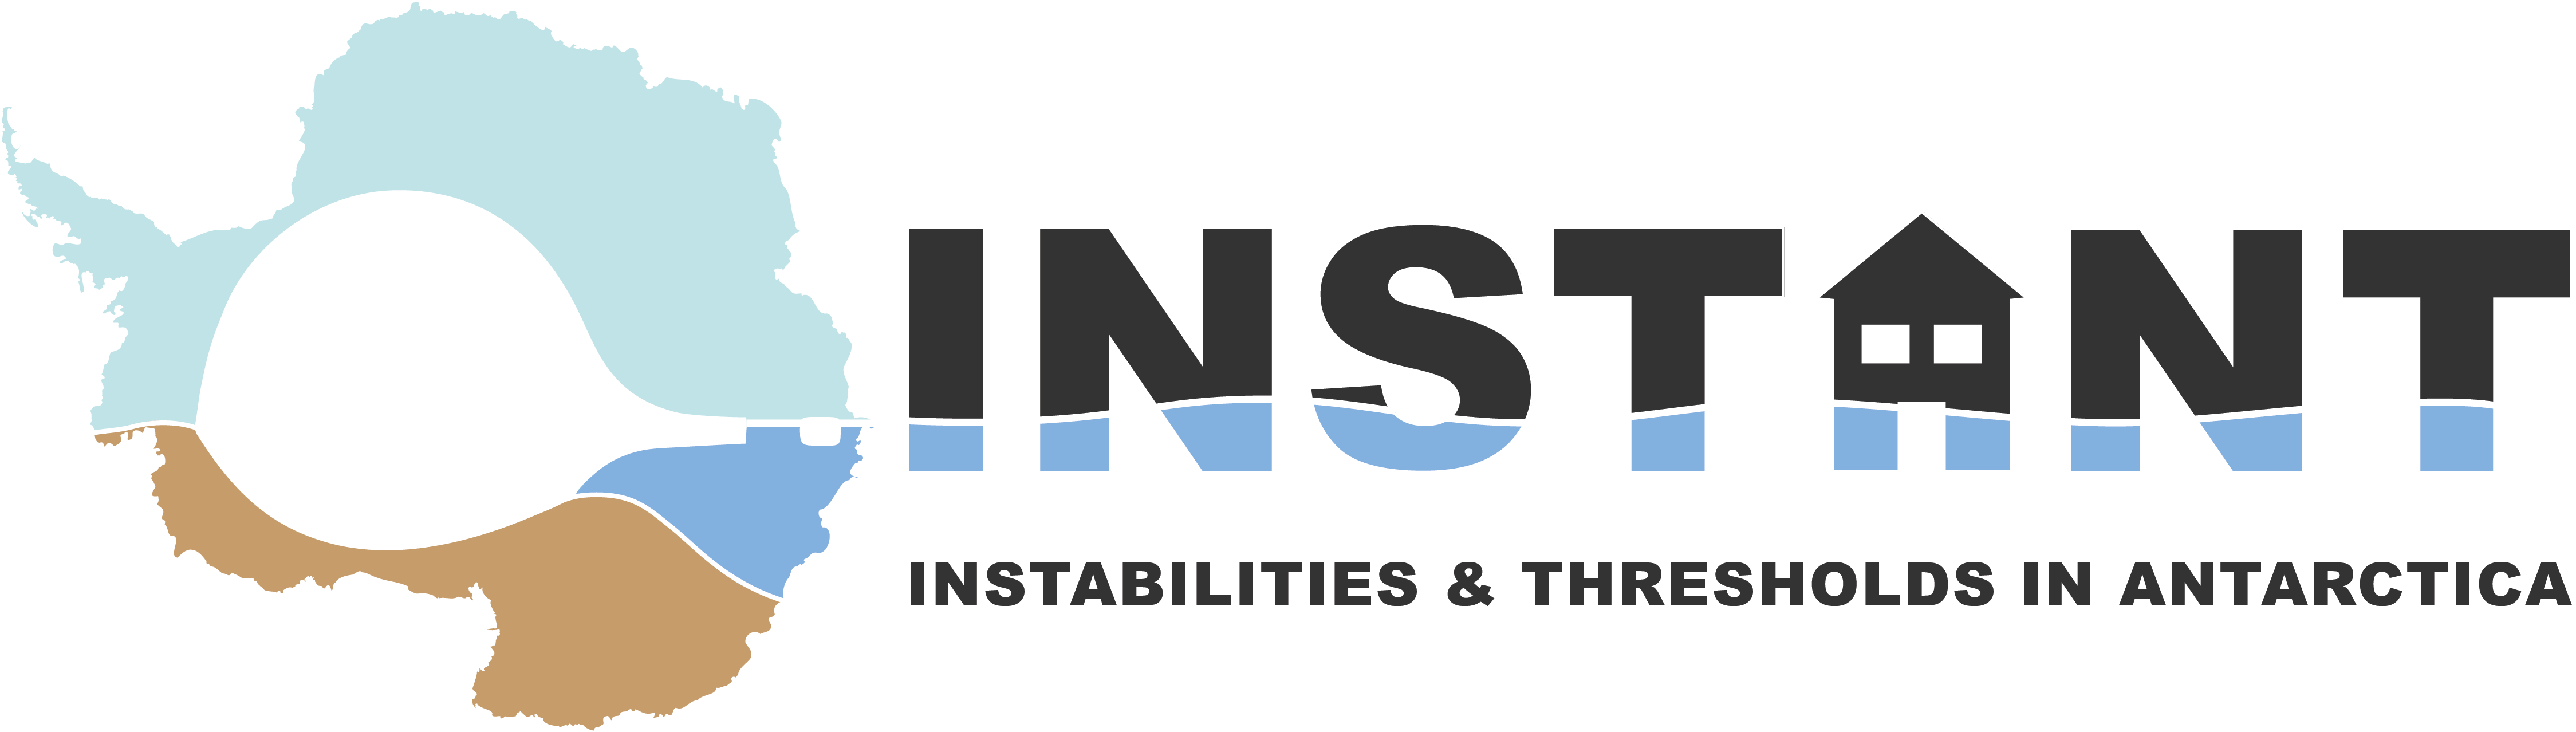 INSTANT logo ant full colors